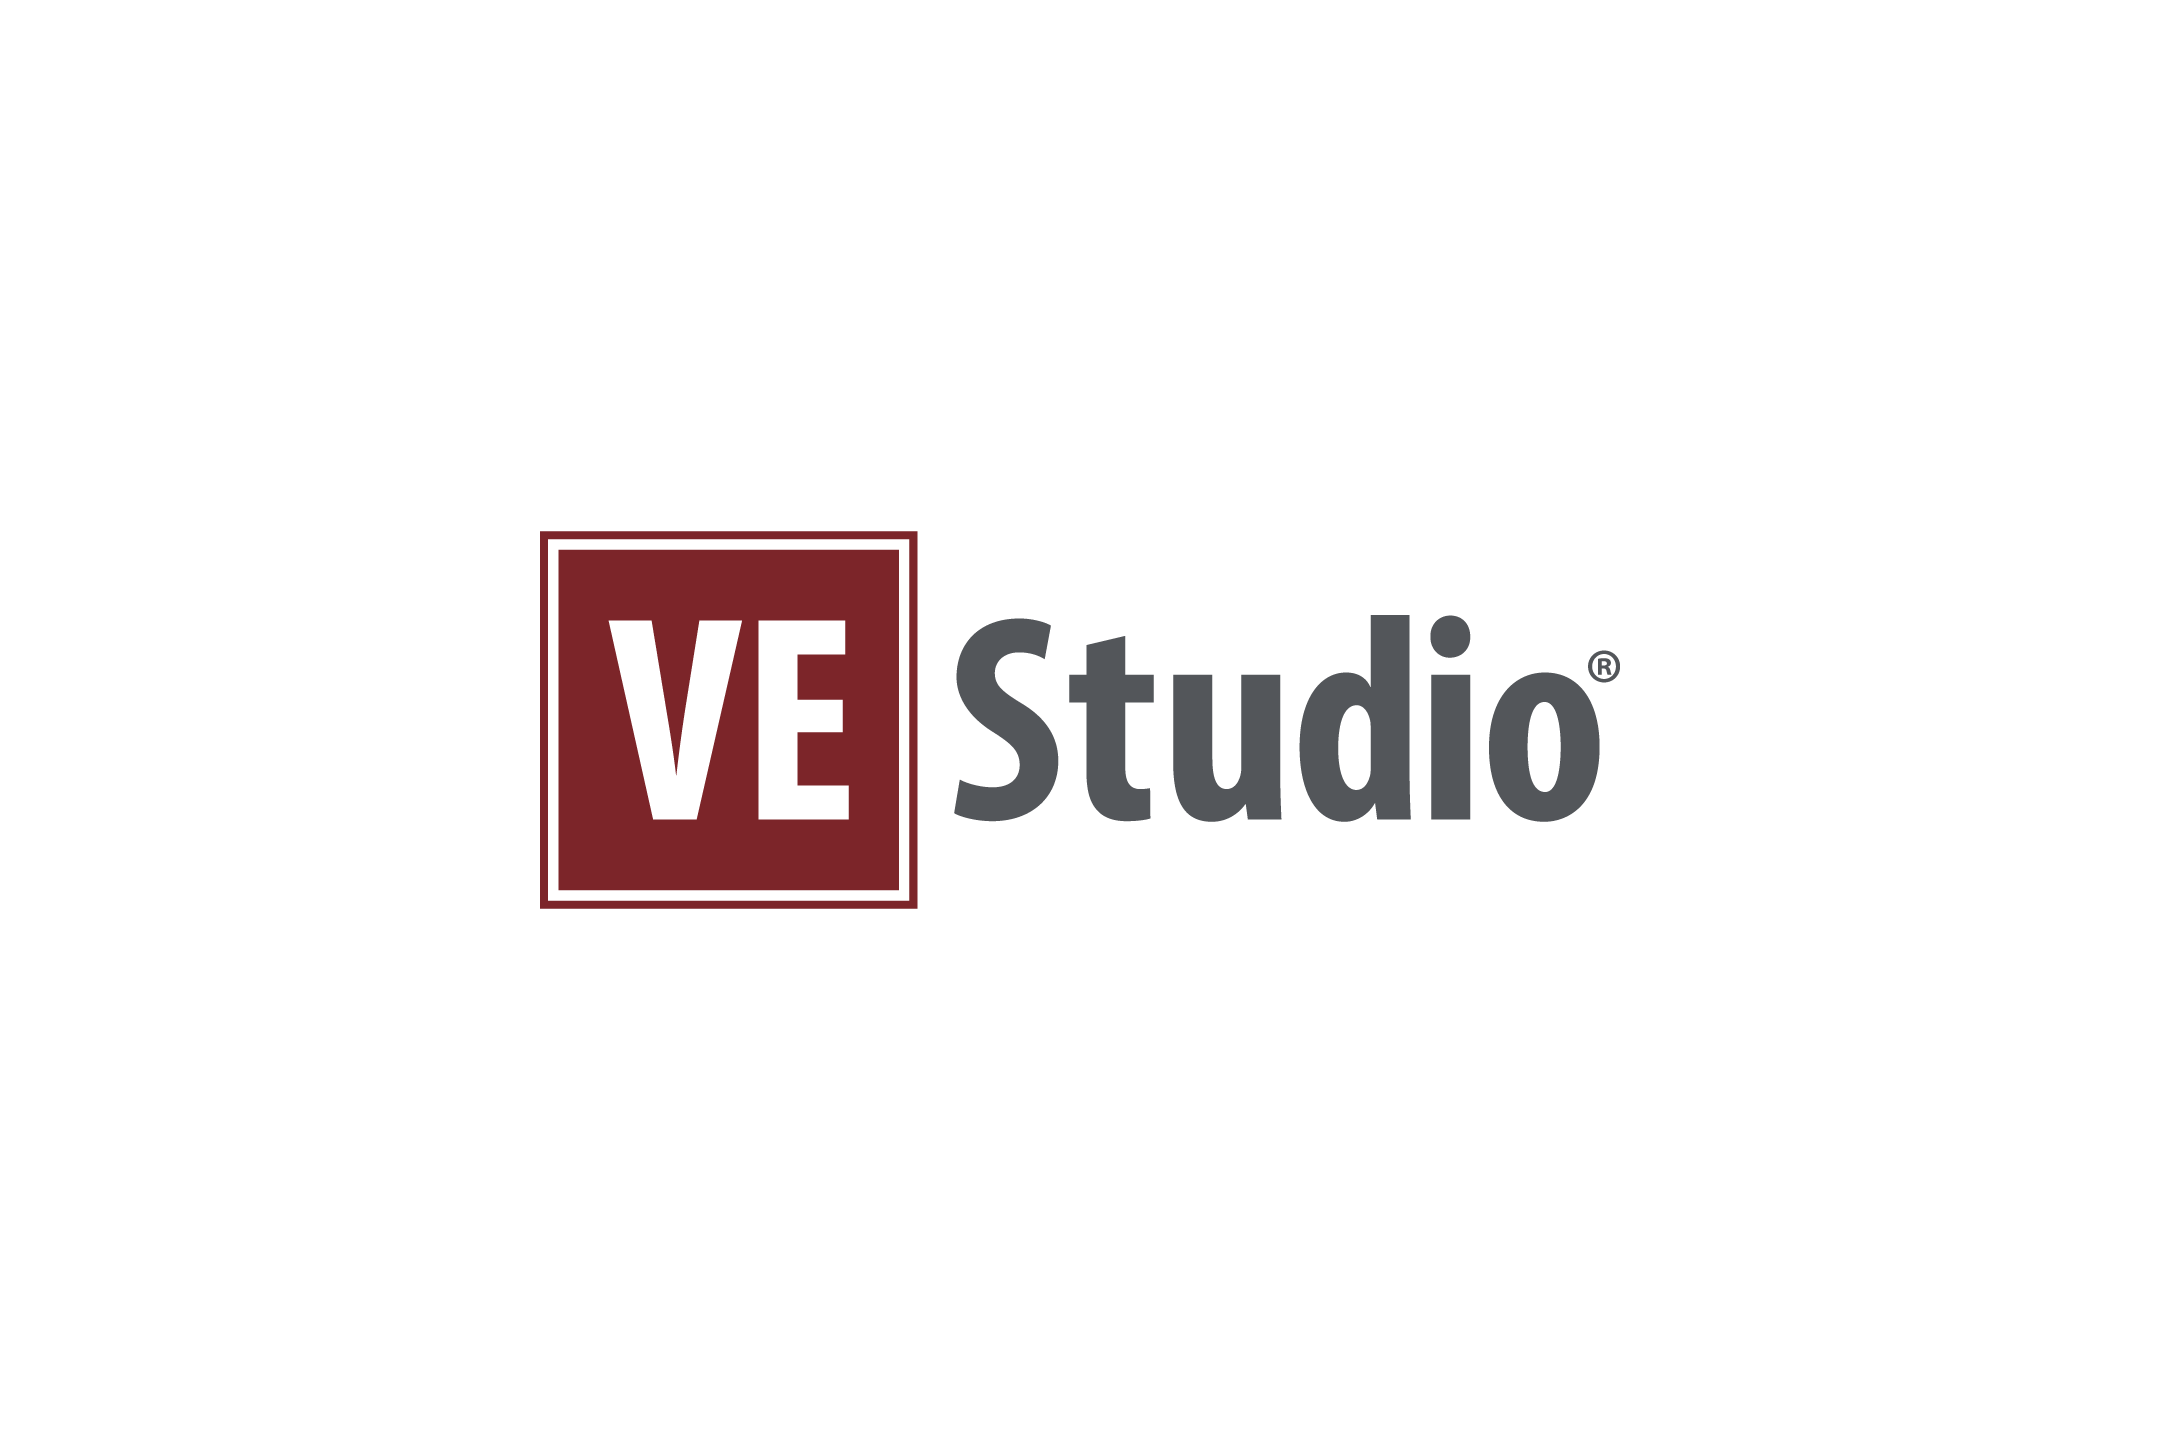 VE Studio